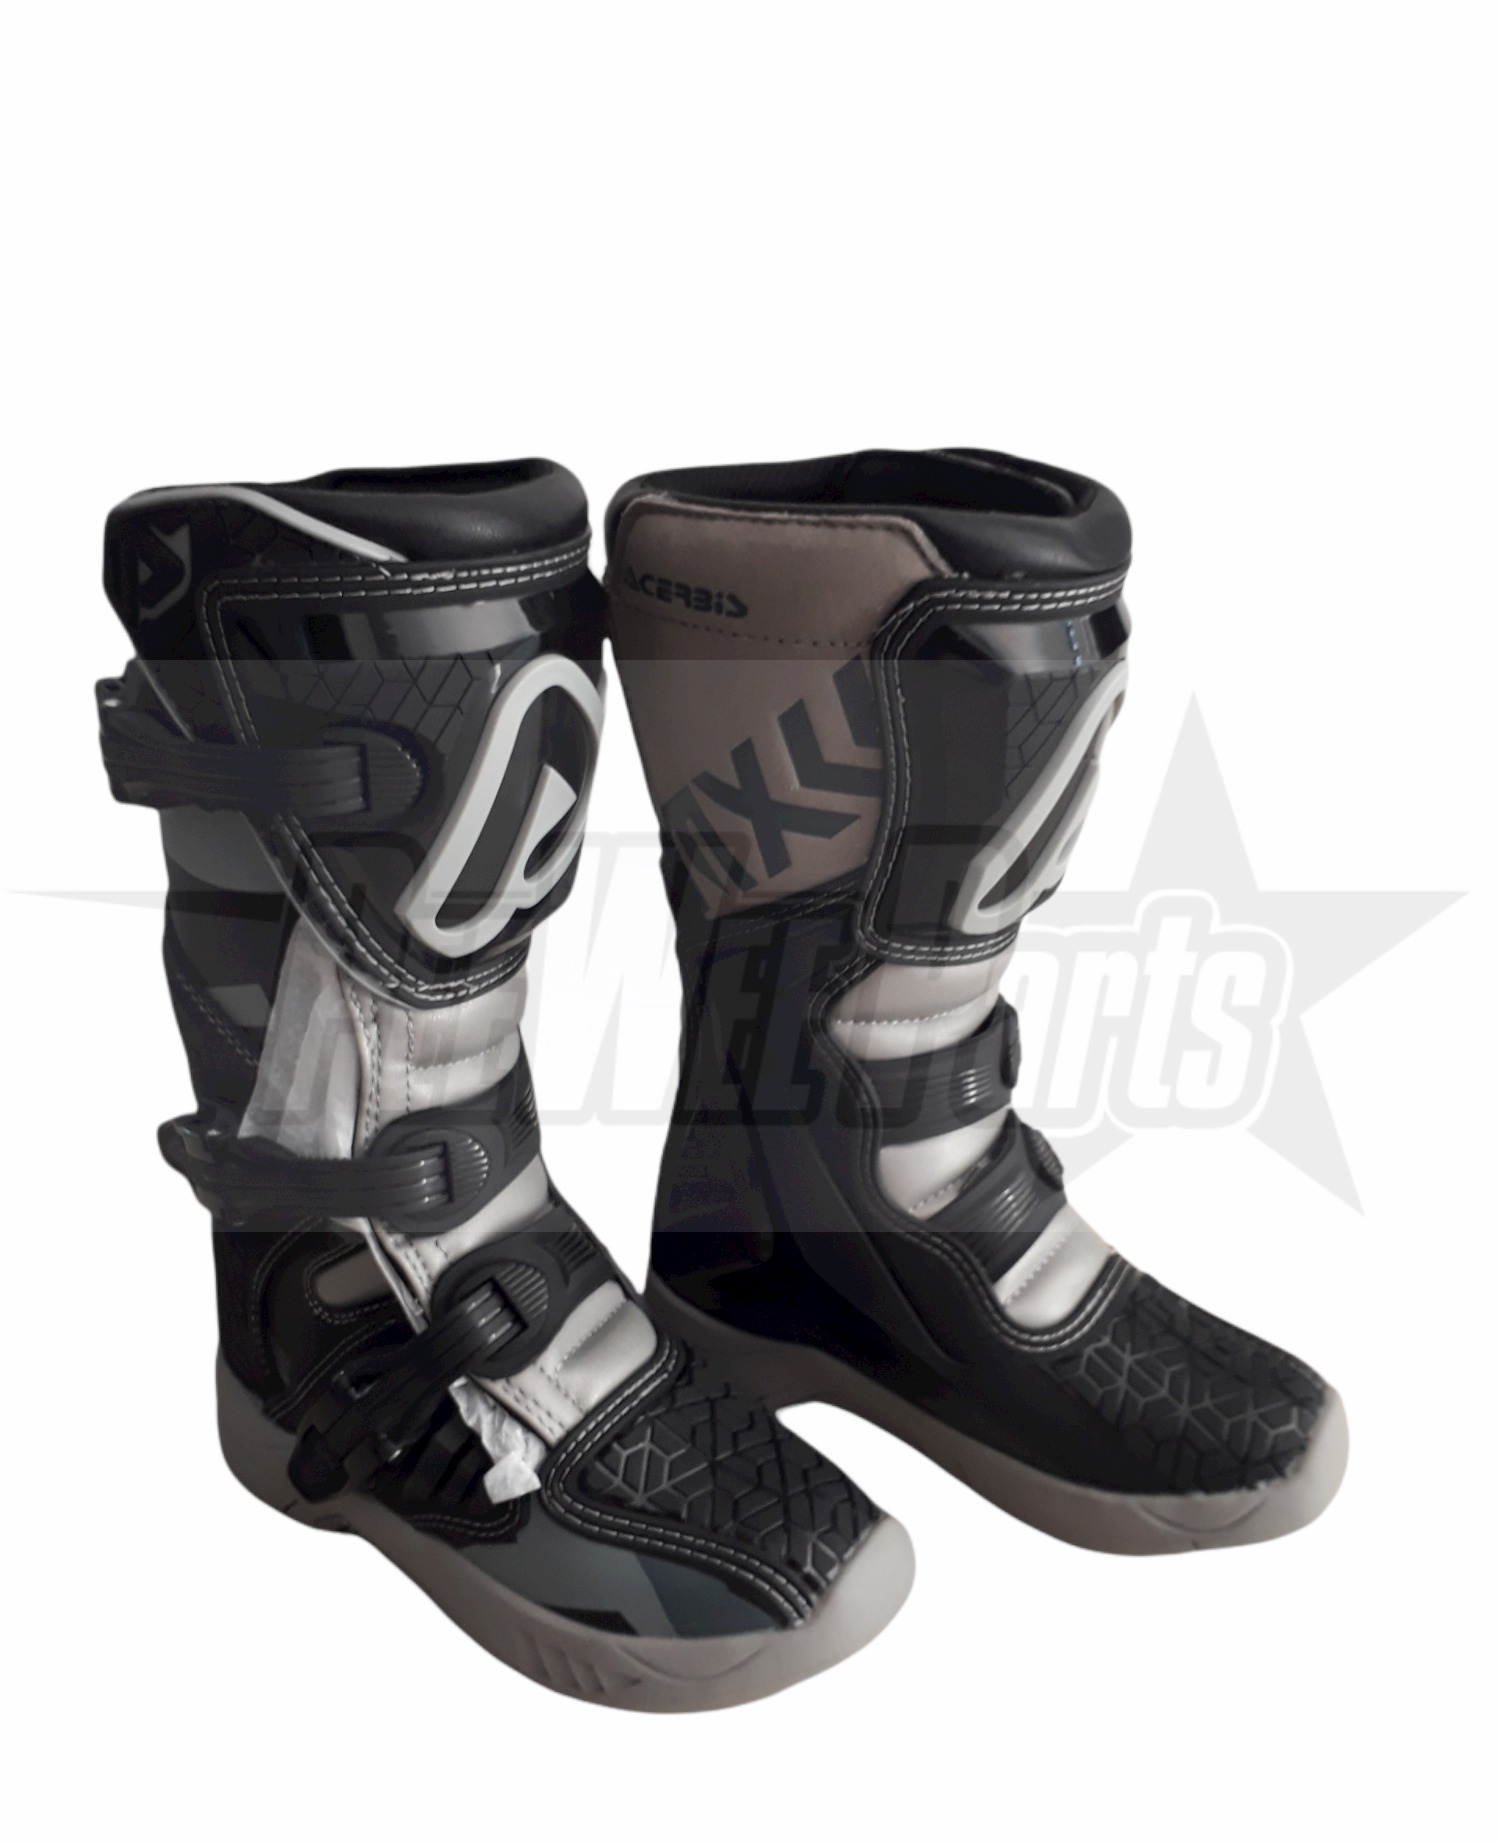 Kids Acerbis offroad boots Black/grey size 36(uk 3)-0